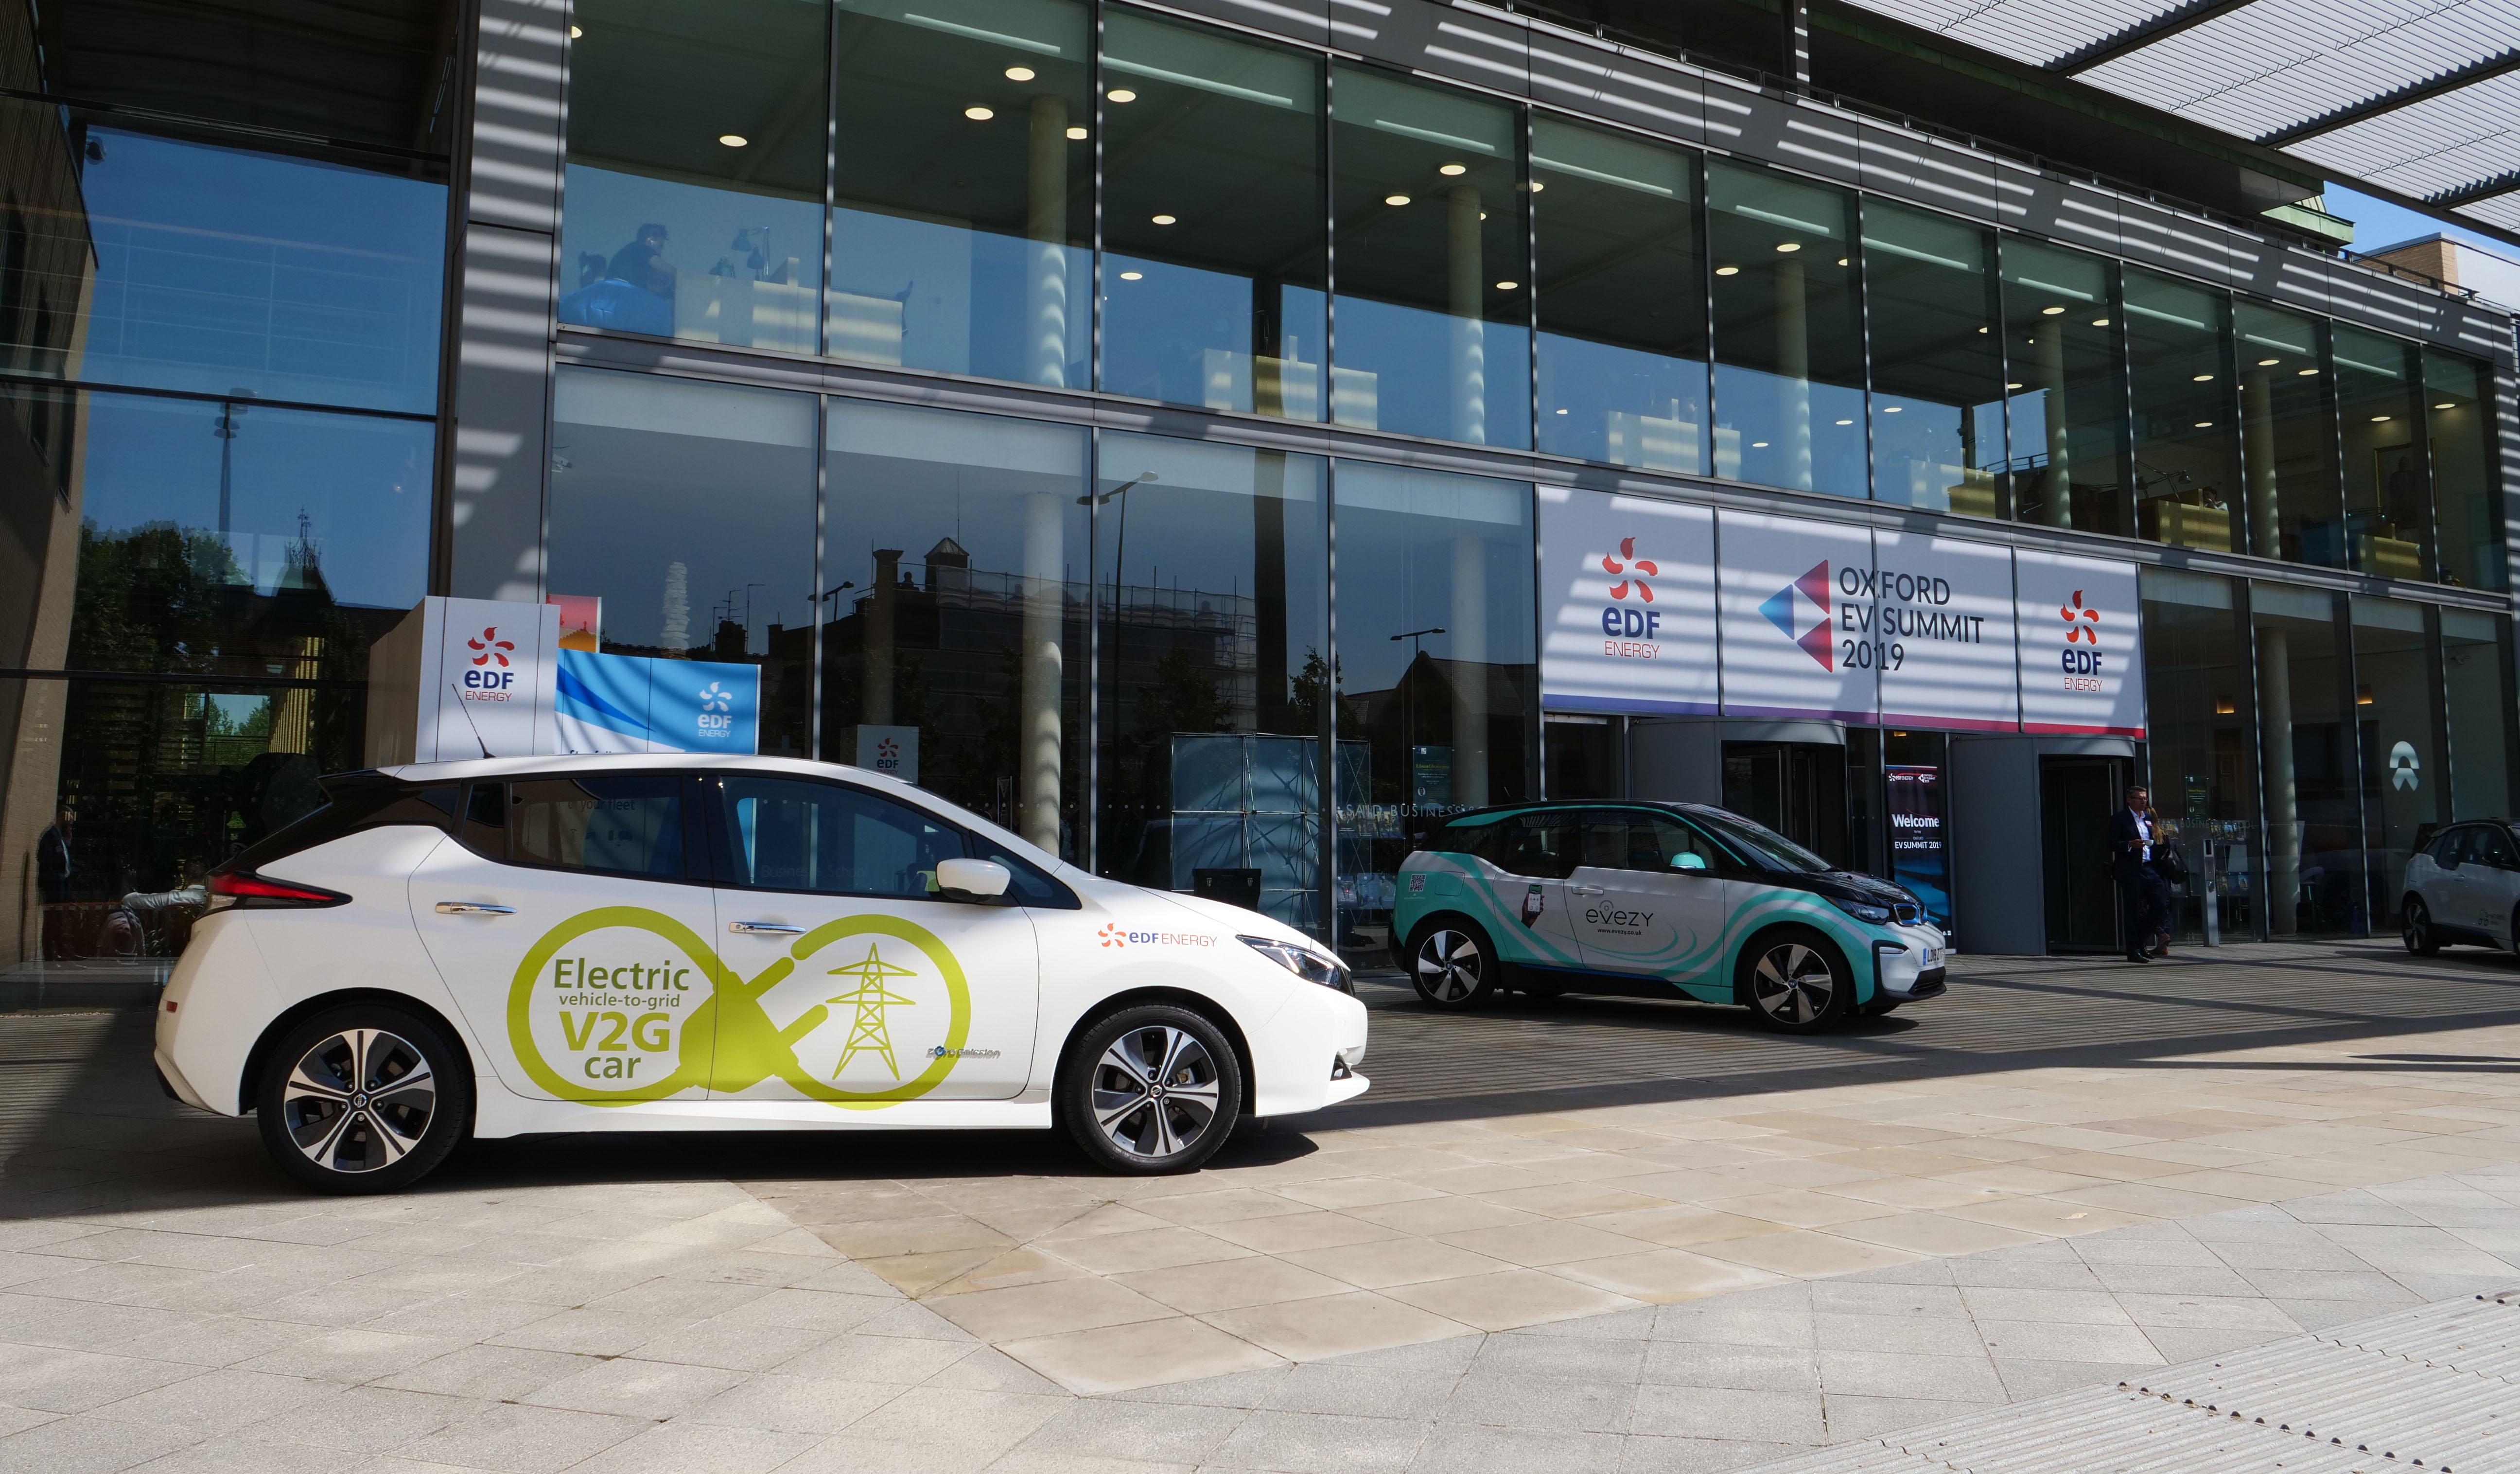 EDF Energy's Vehicle to Grid (V2G) car on show.